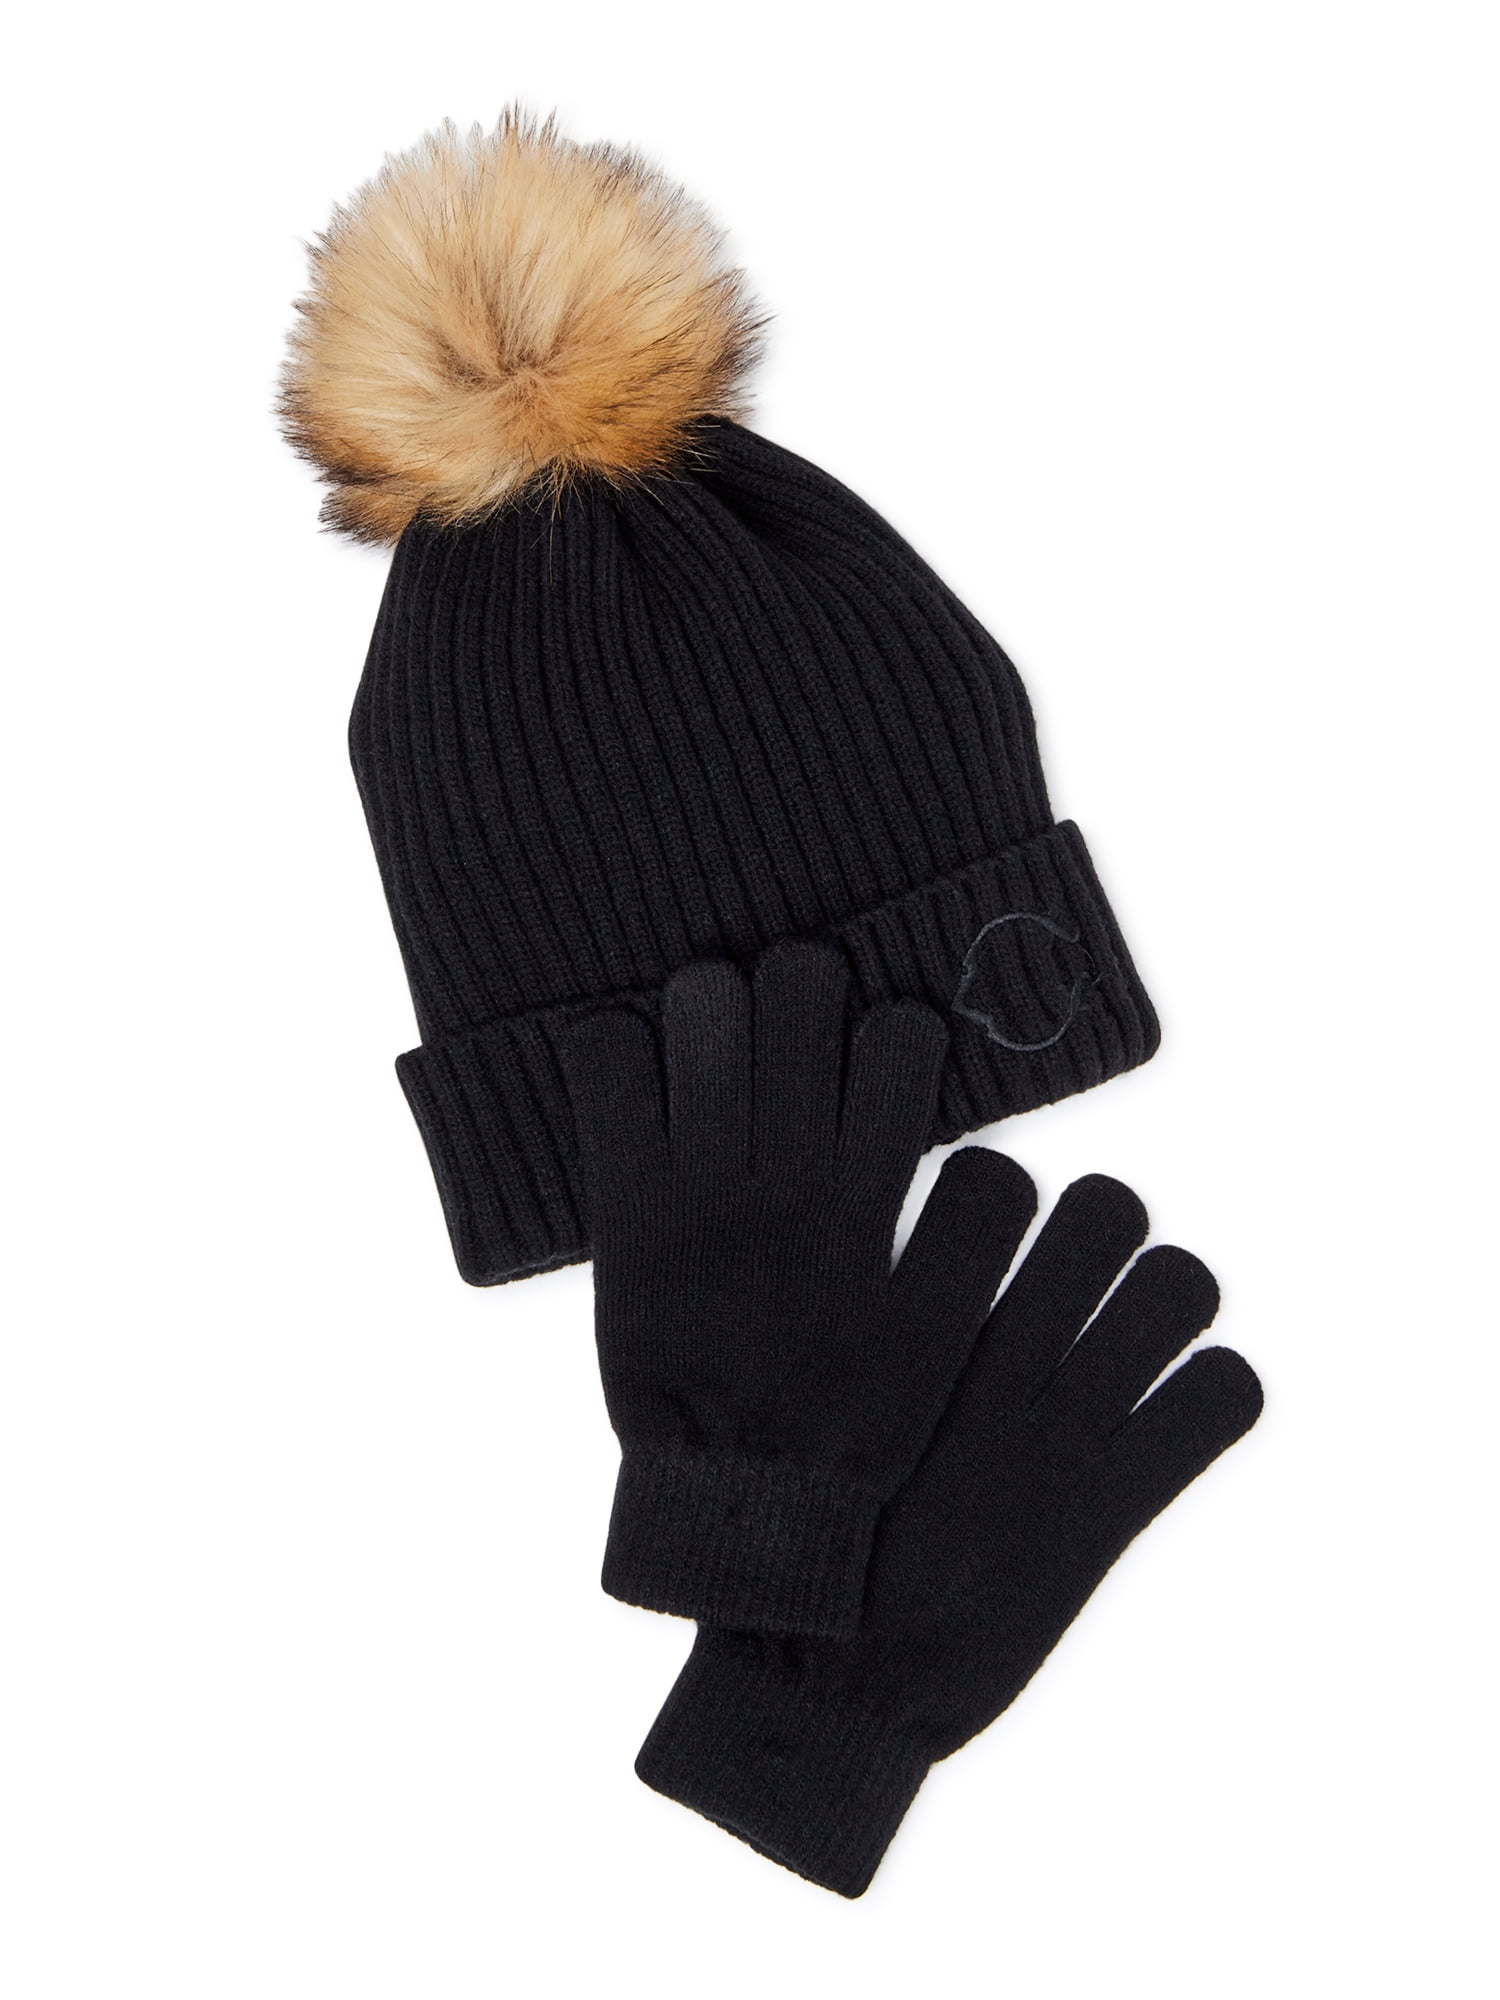 Polar Wear Girls & Teens Winter Knit Beanie Hat and Glove 2 Piece Cold Weather Accessories Set 